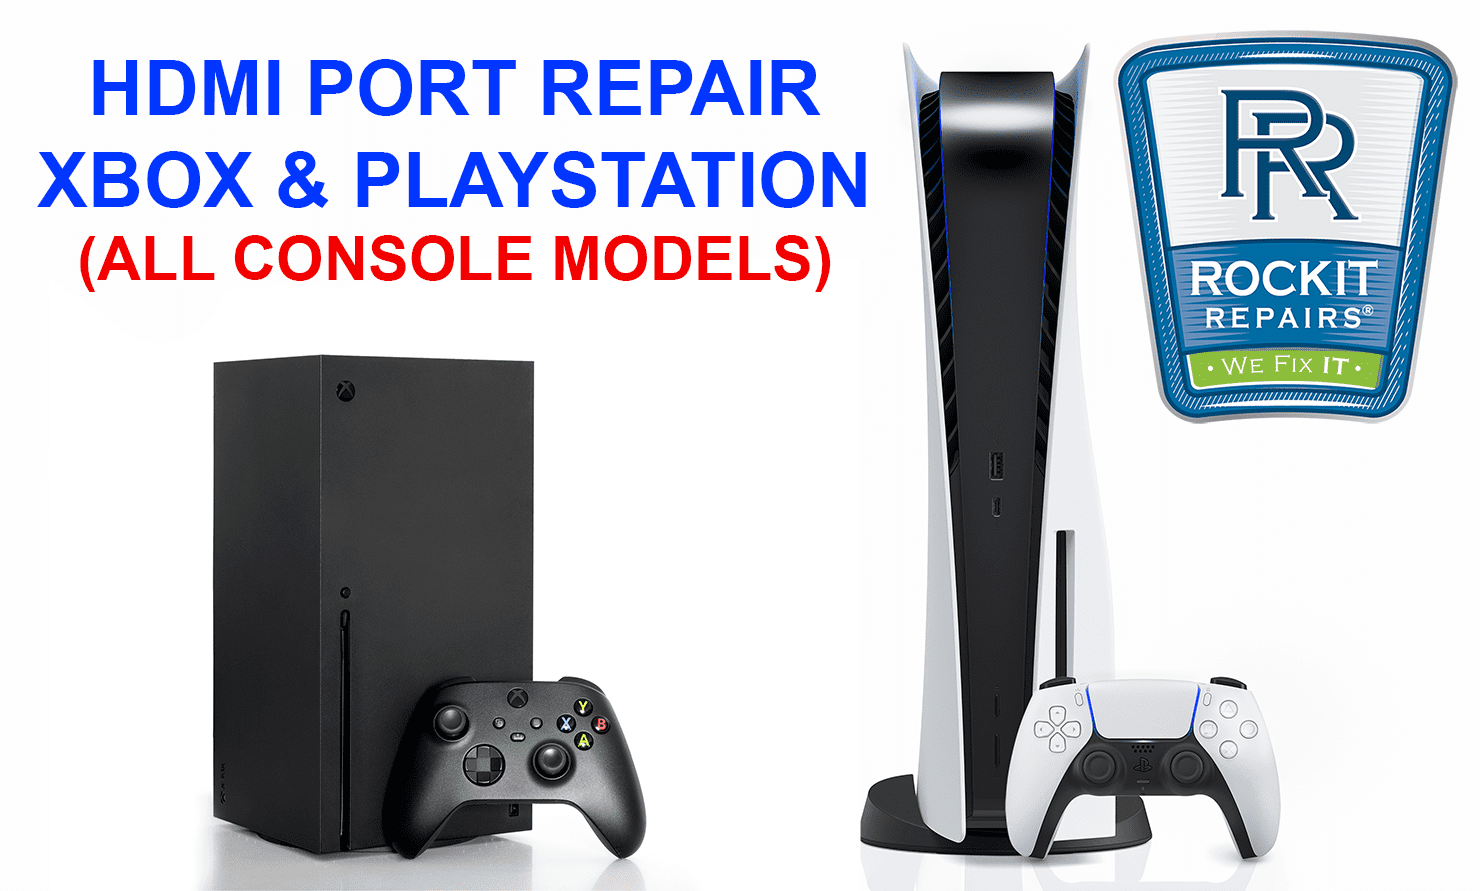 xbox and playstation hdmi port repair